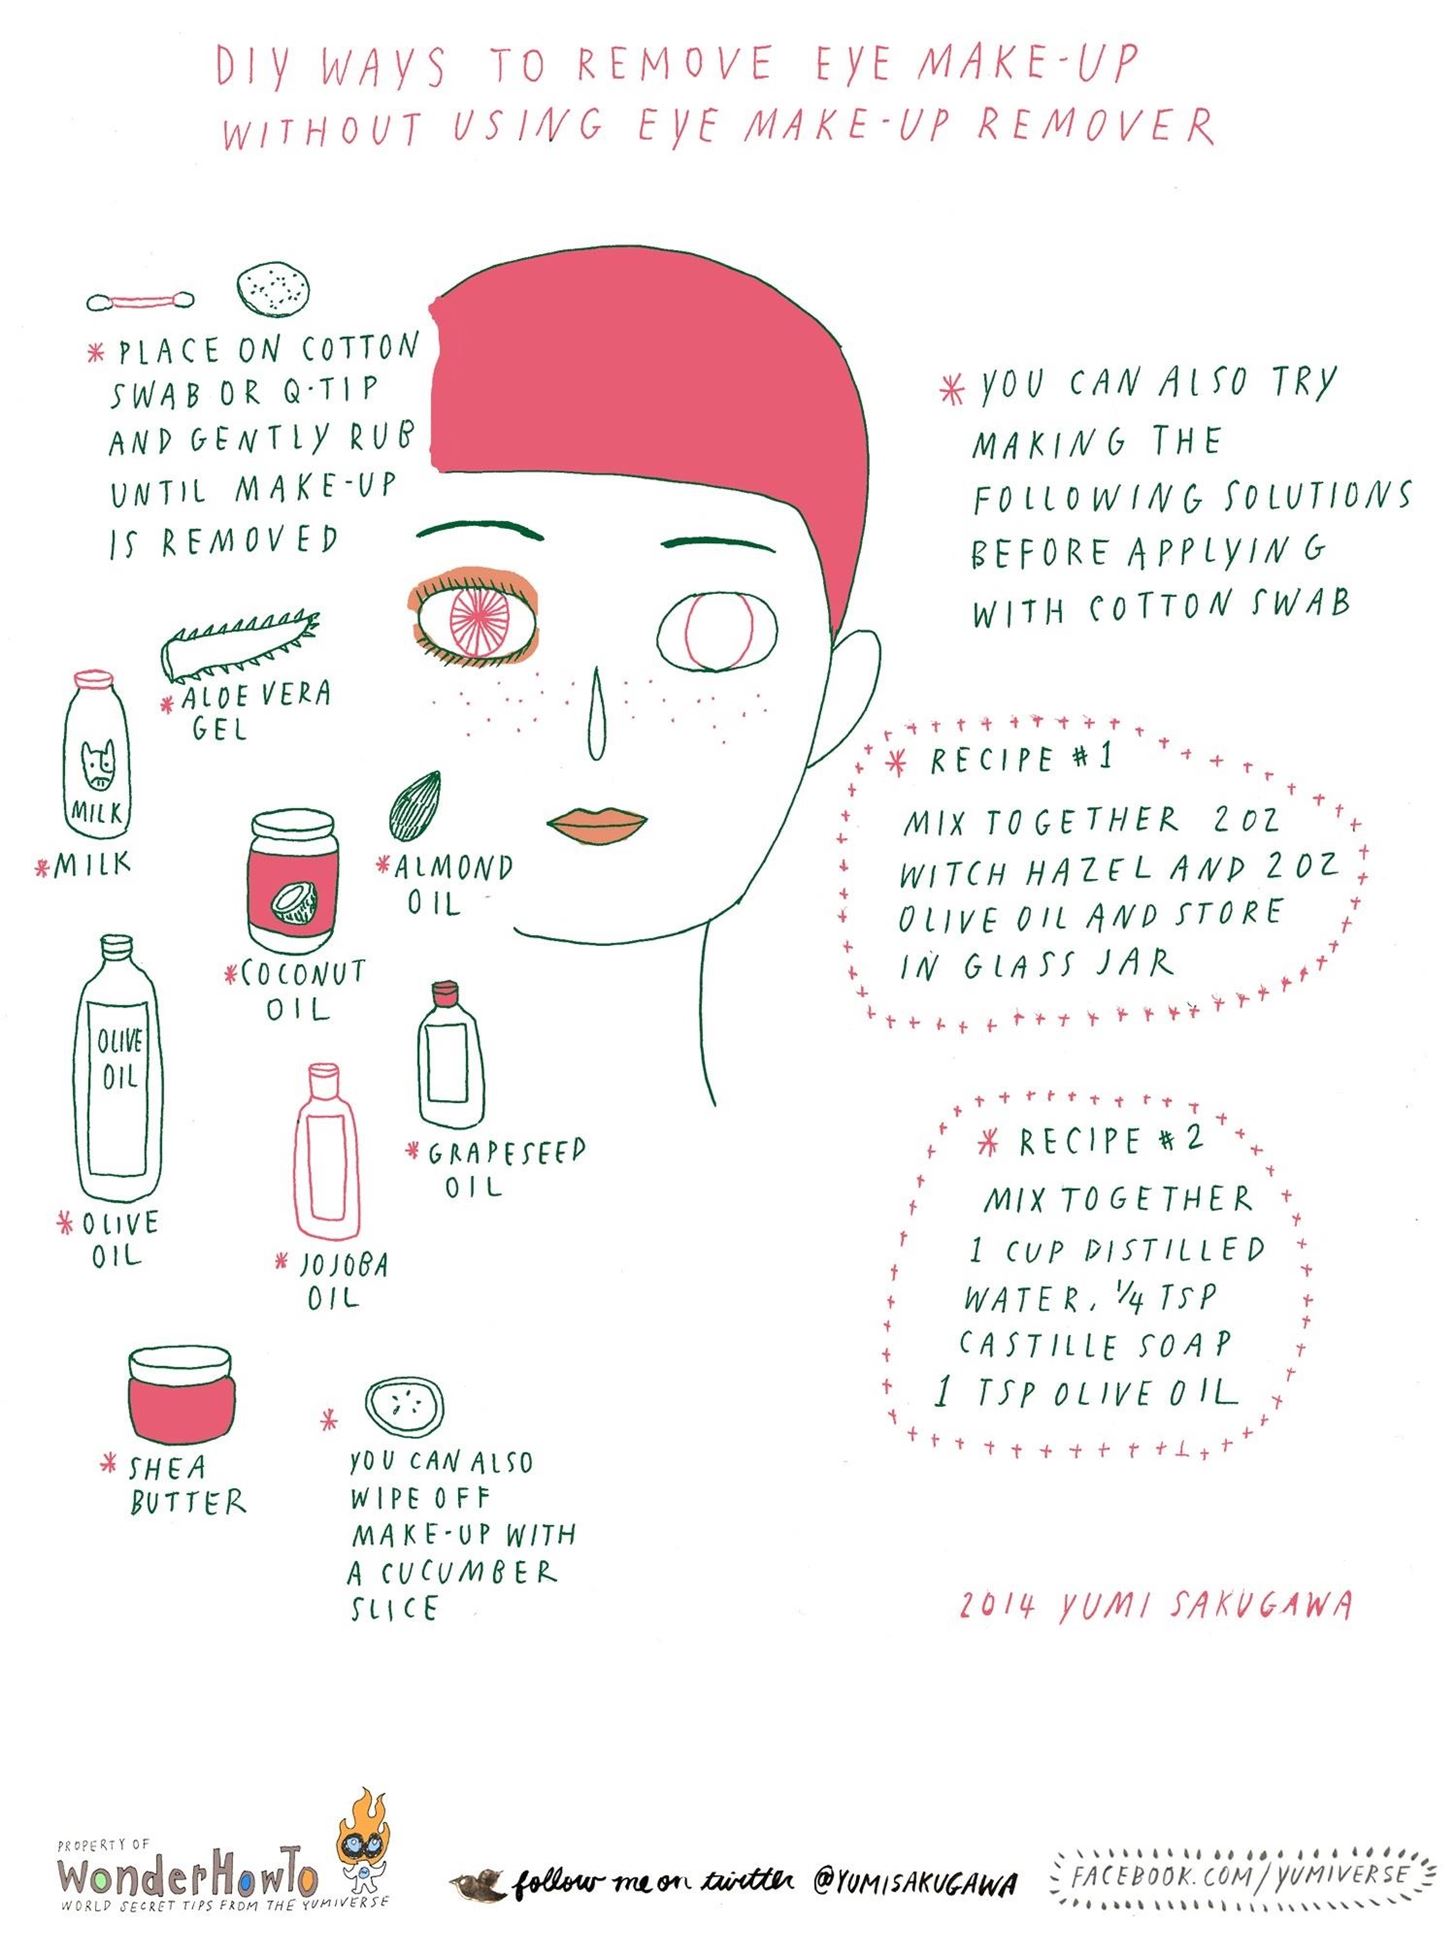 DIY Eye Makeup Remover: 11 Natural